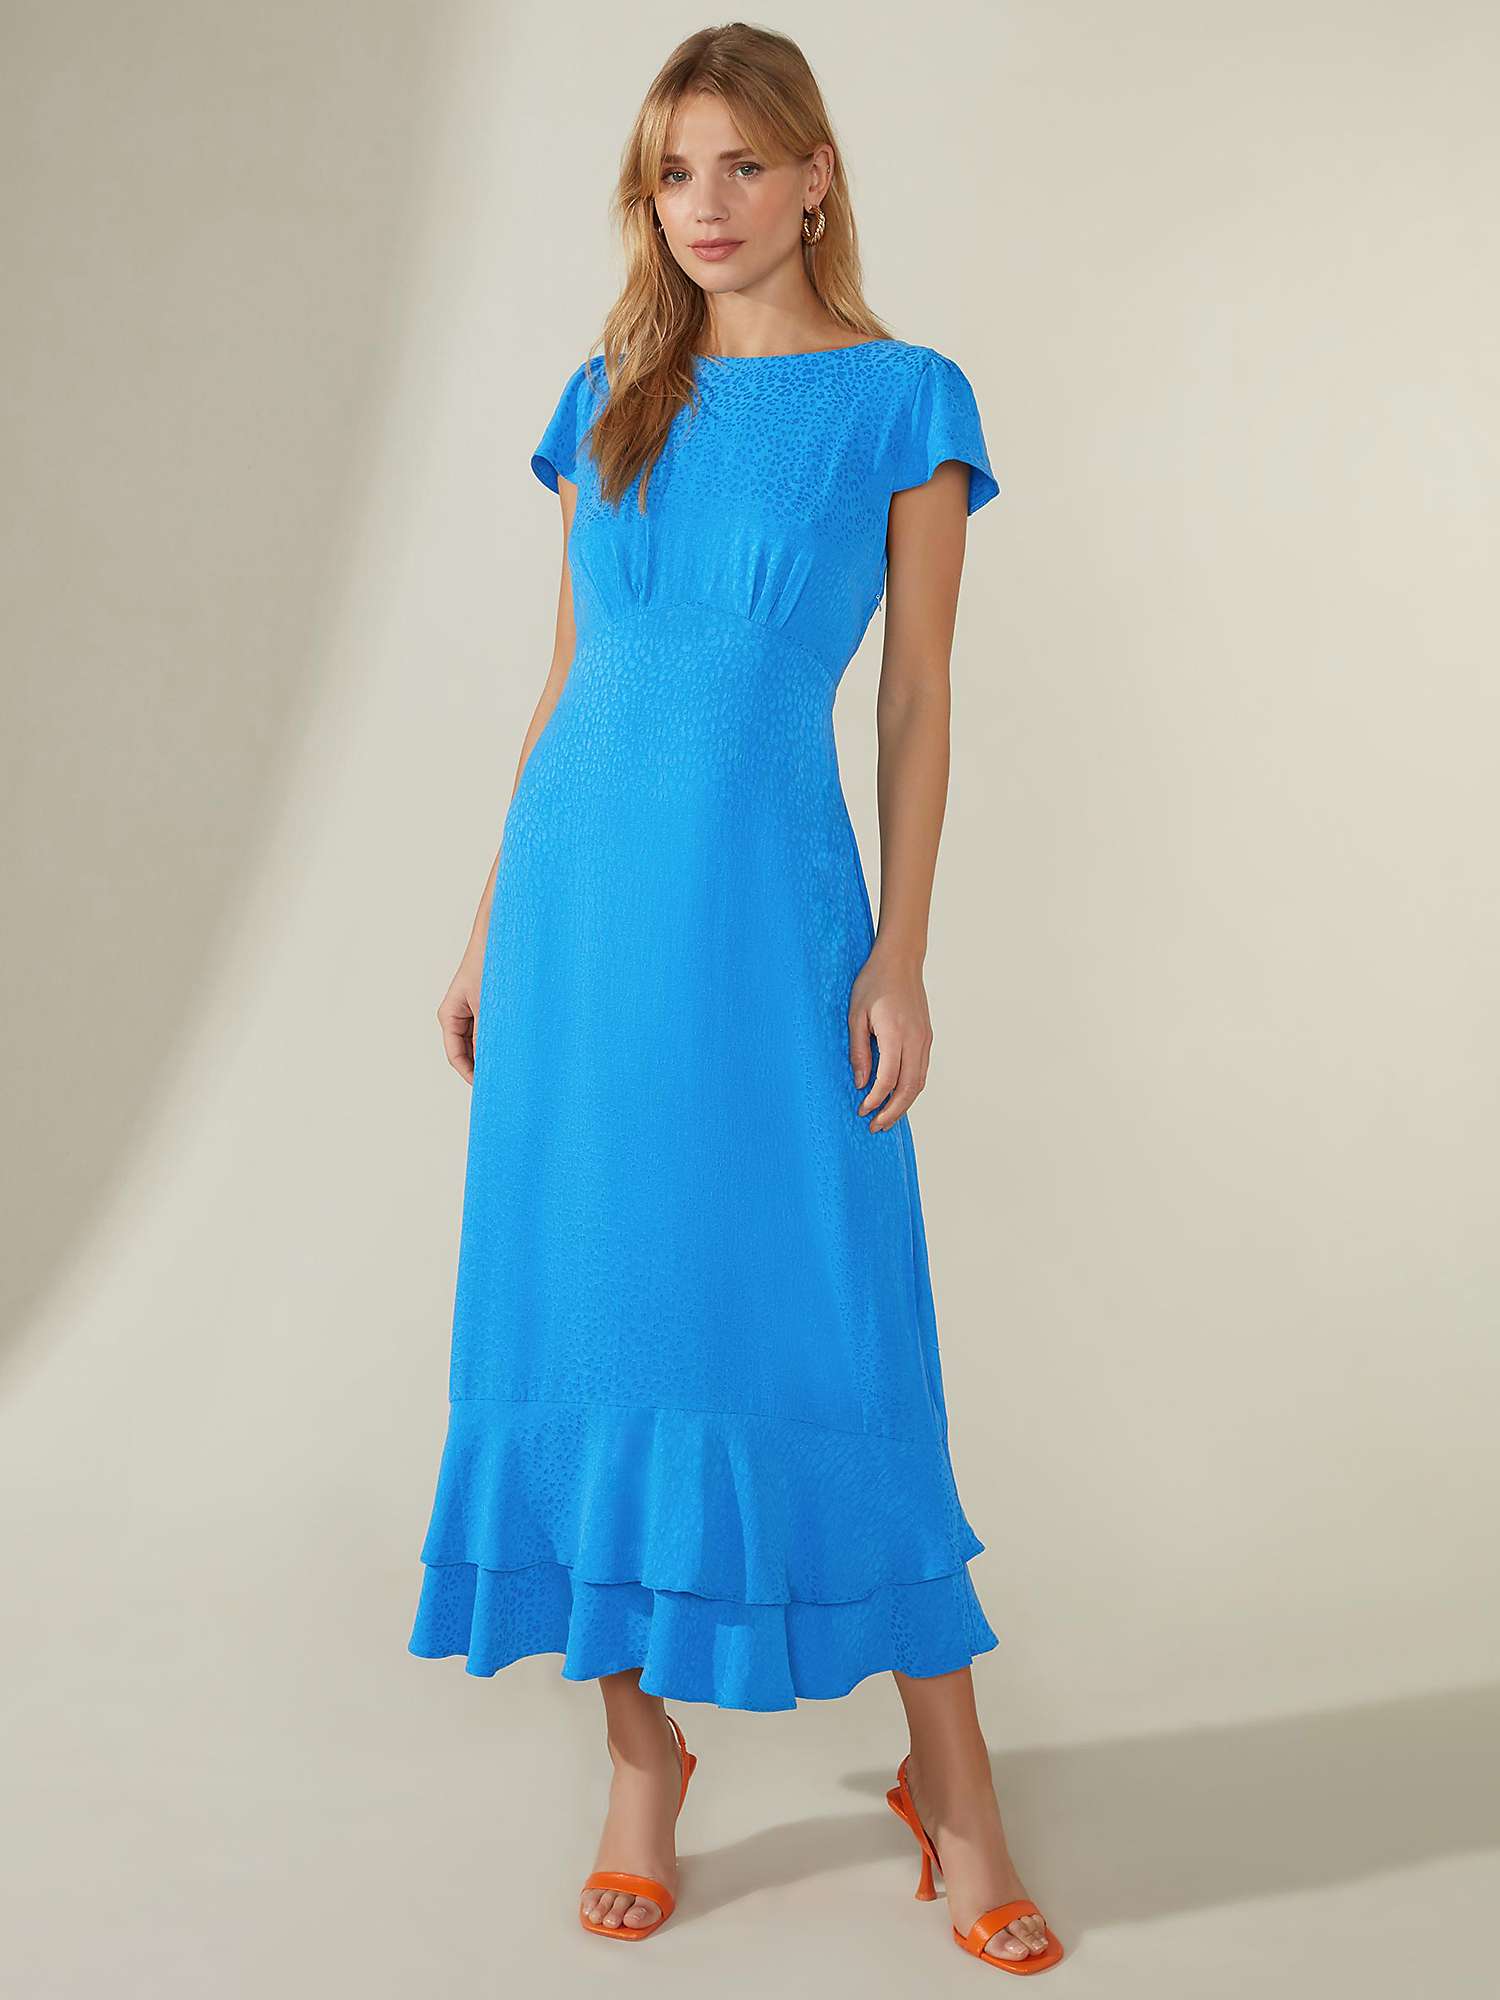 Ro&Zo Phoebe Scoop Back Dress, Blue at John Lewis & Partners